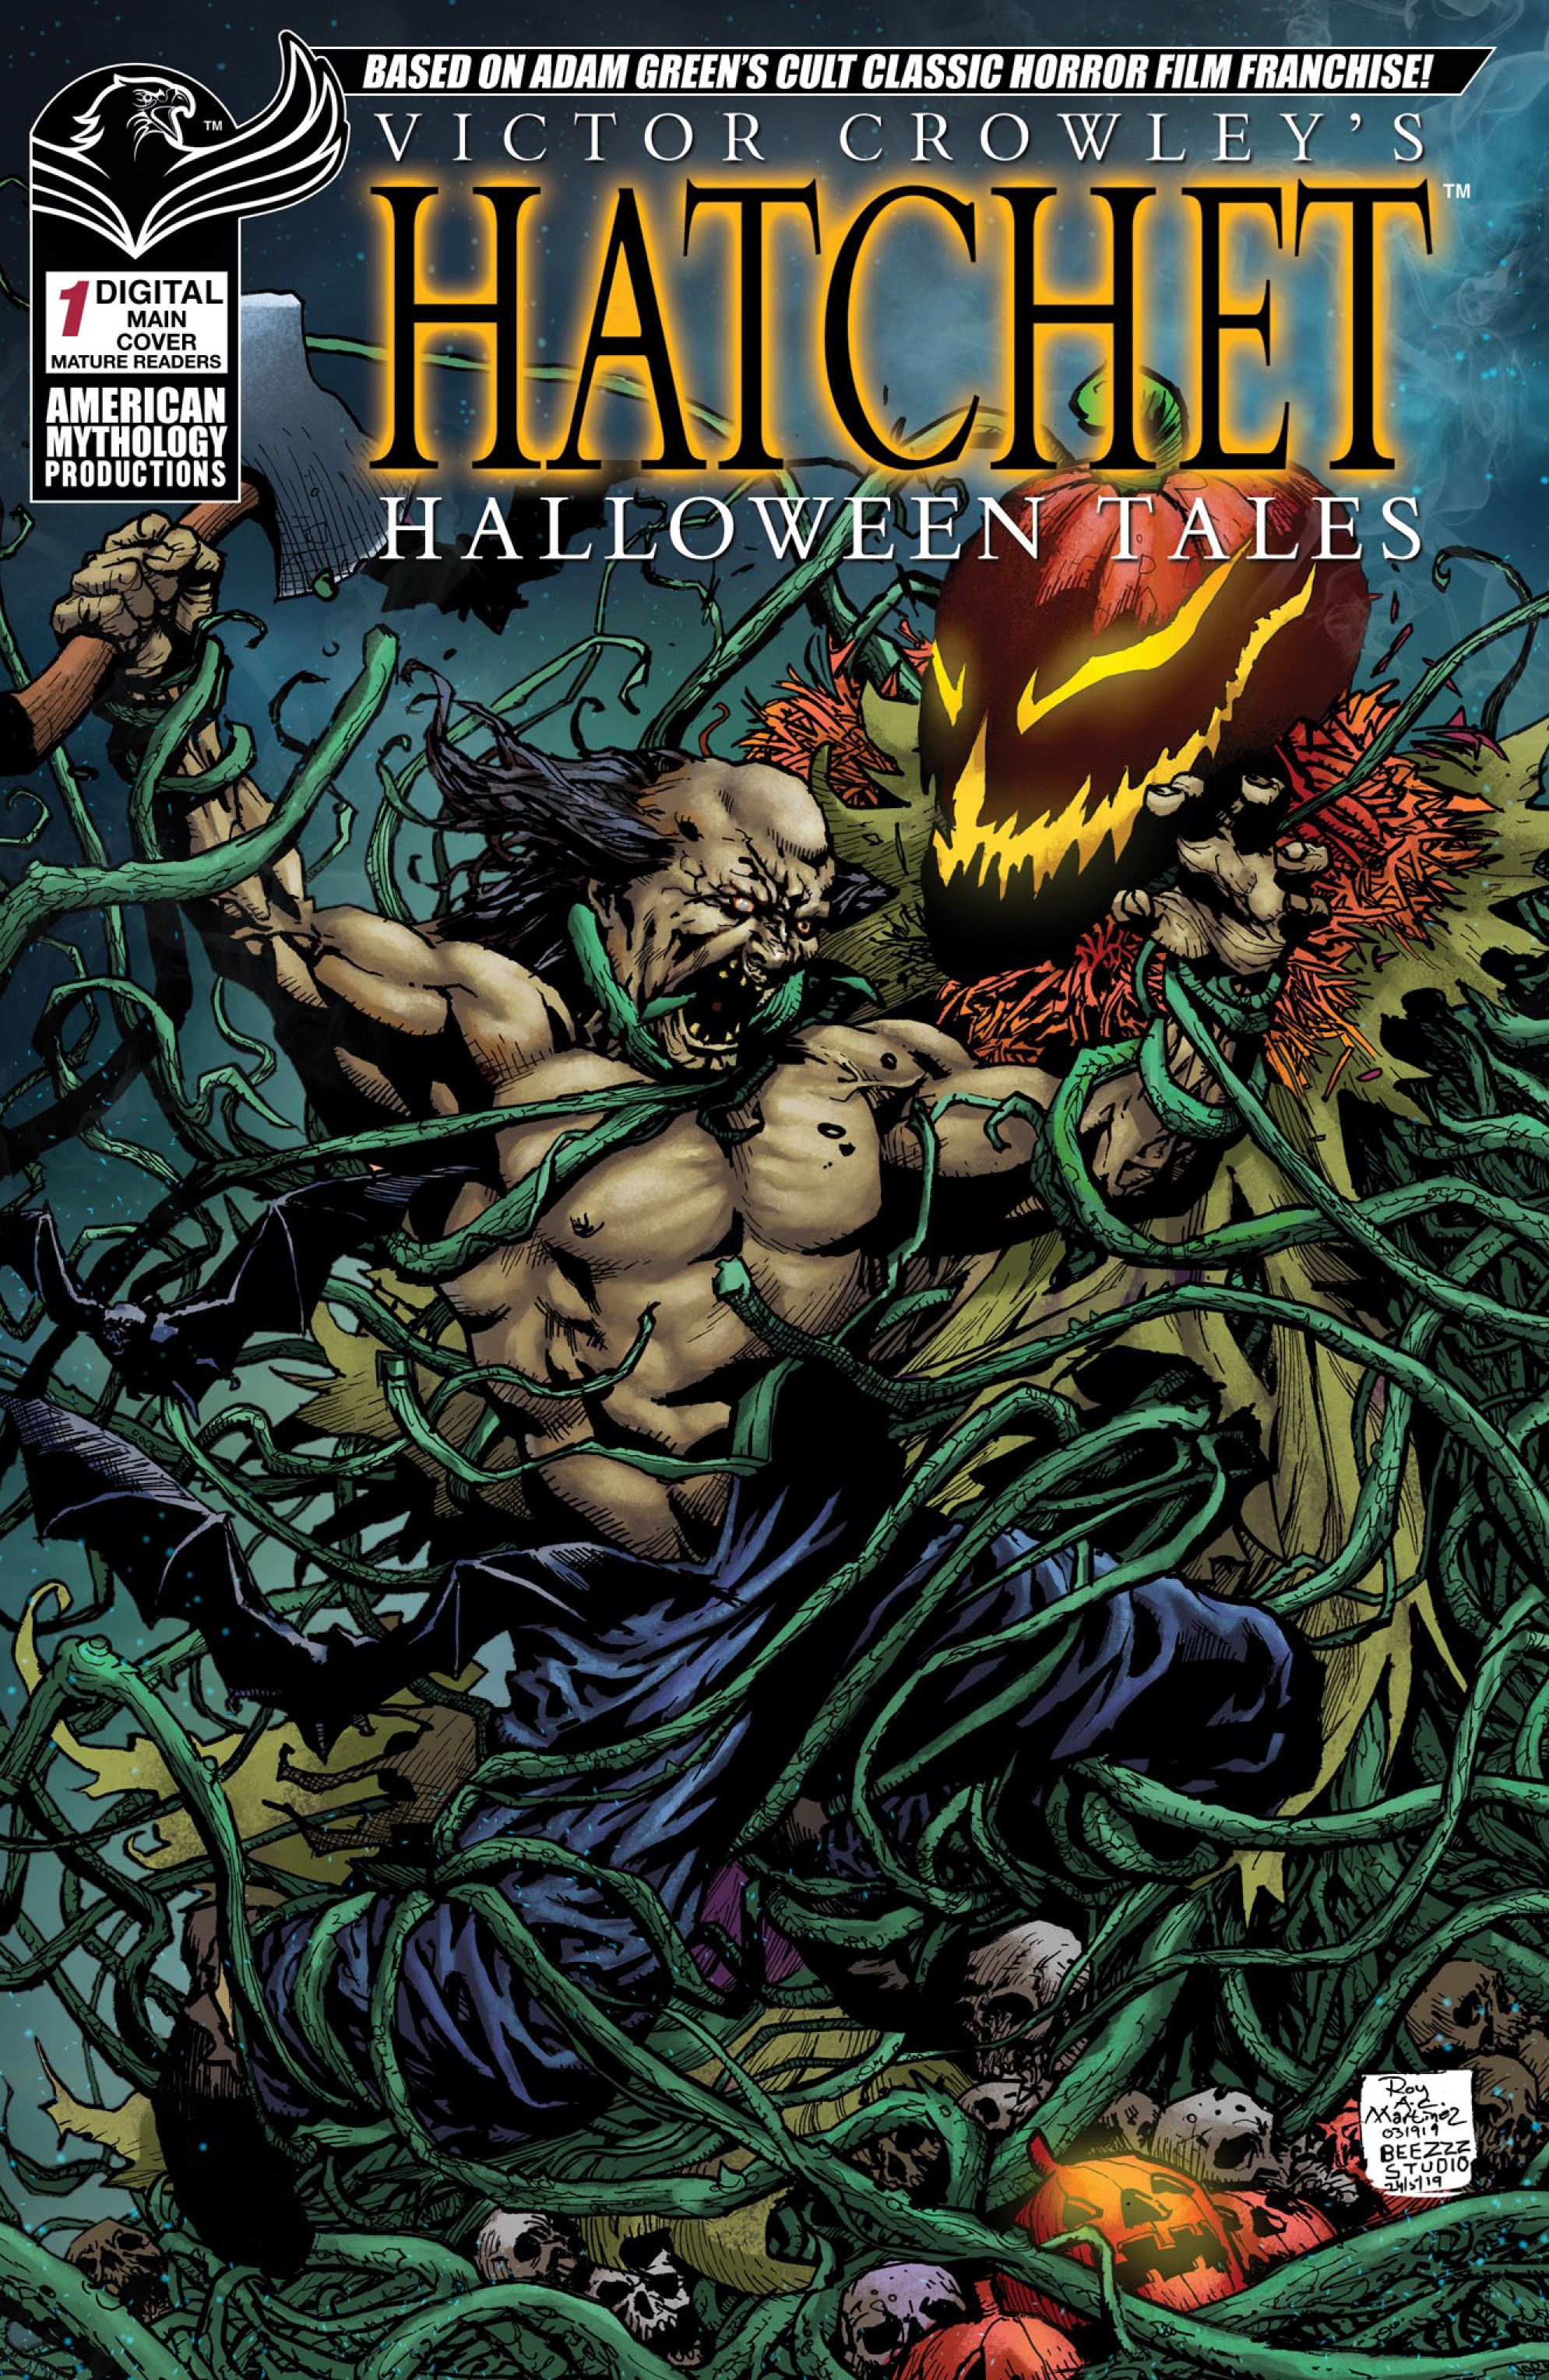 Read online Victor Crowley's Hatchet Halloween Tales comic -  Issue #1 - 1